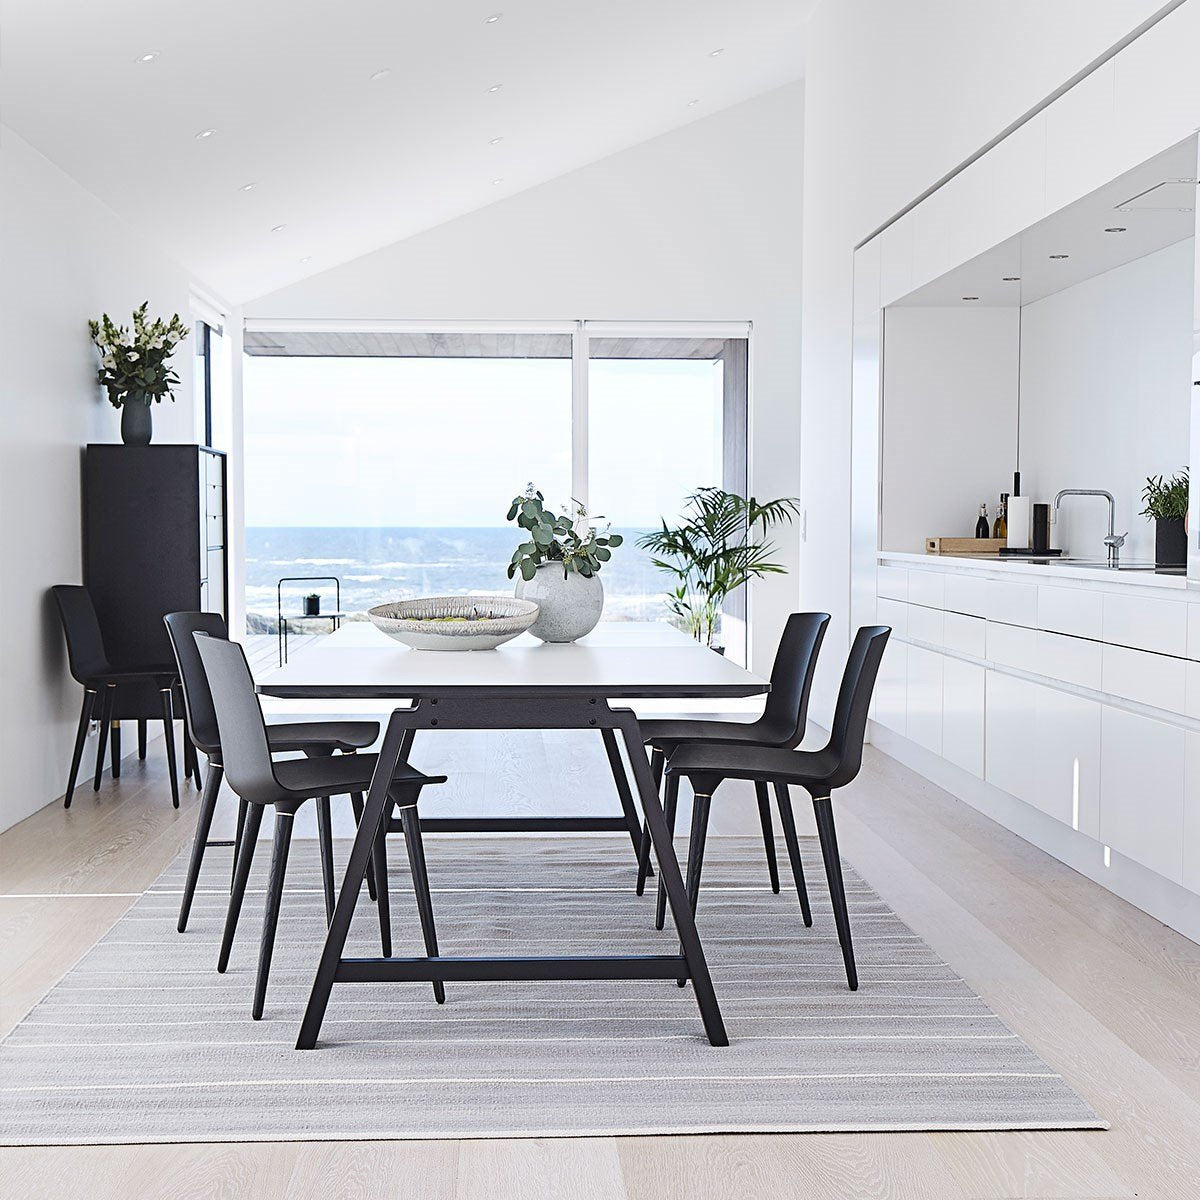 Andersen Furniture T1 Extendable Table, White Laminate, Black Frame, 180cm